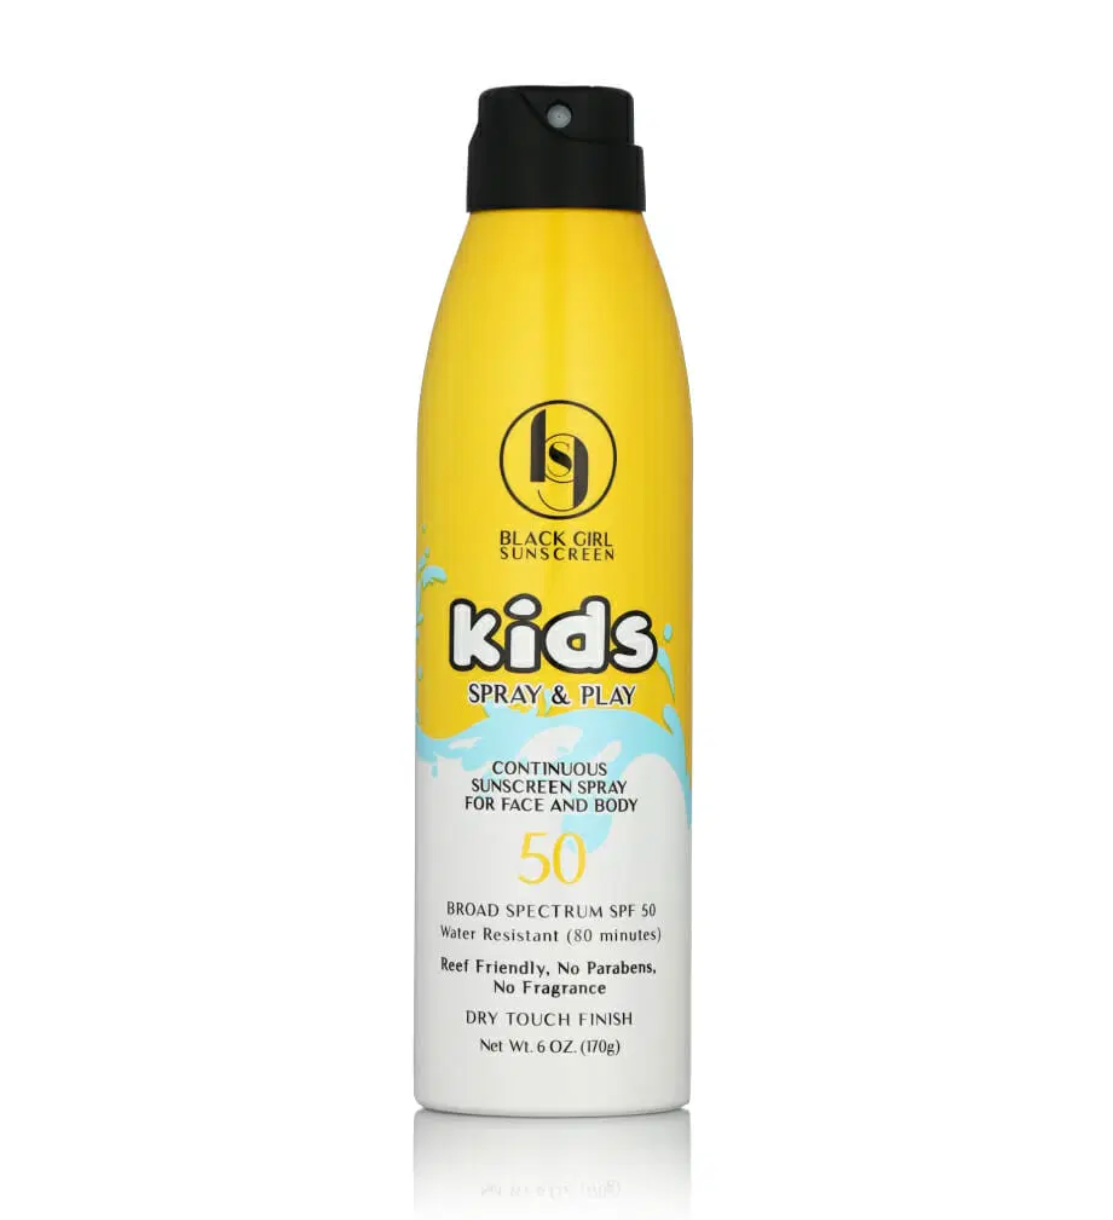 Black Girl Sunscreen BGS Kids Spray & Play SPF 50 Sunscreen (6 oz.)